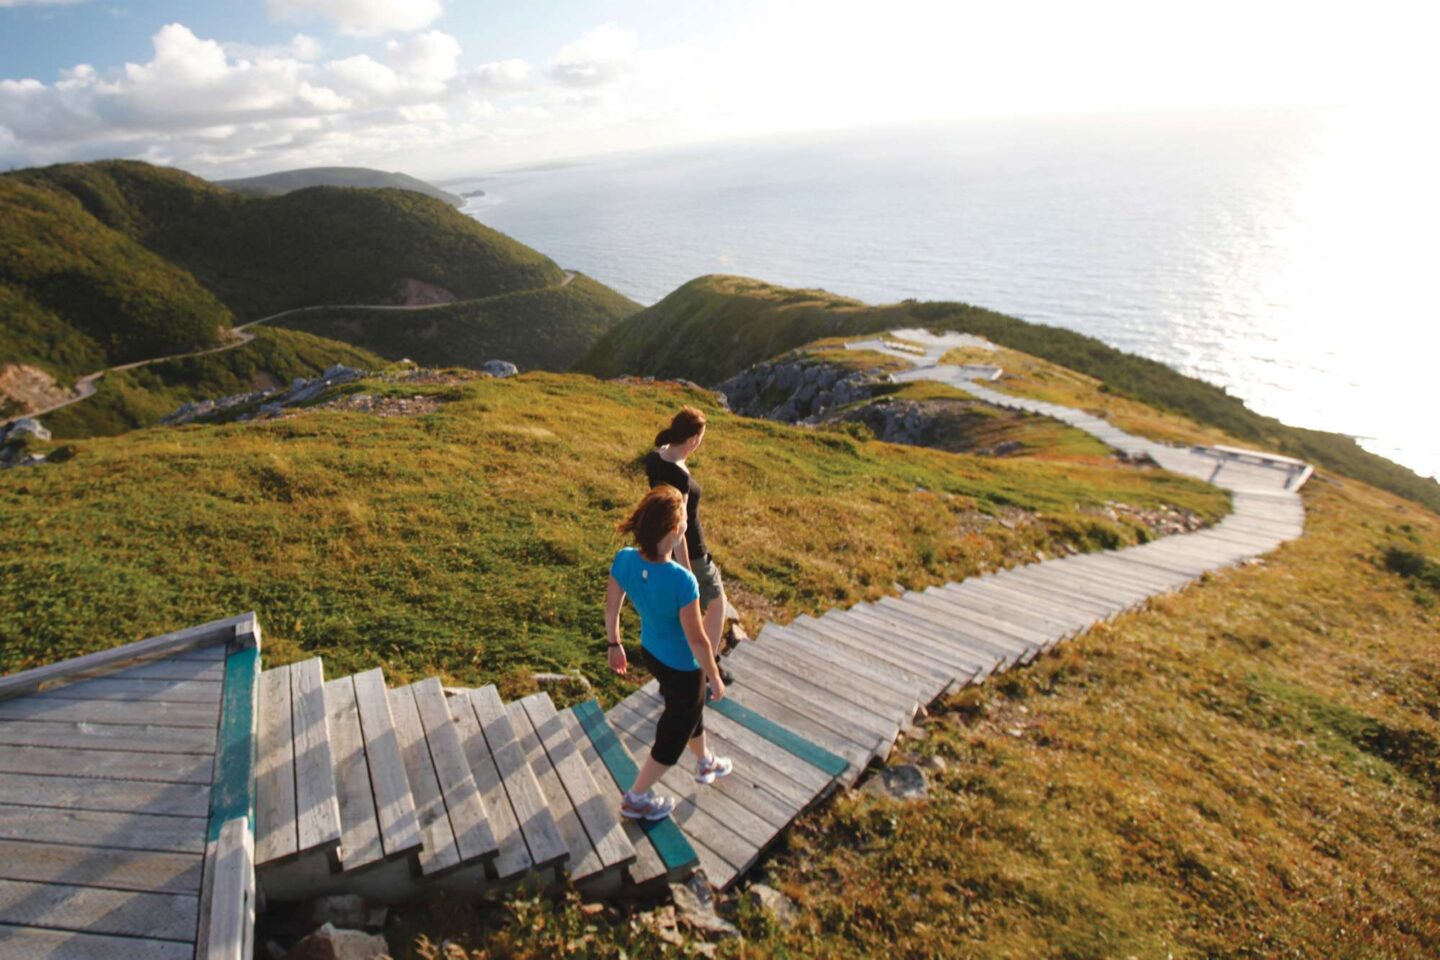 canada hikers skyline trail cape breton highlands national park nstb